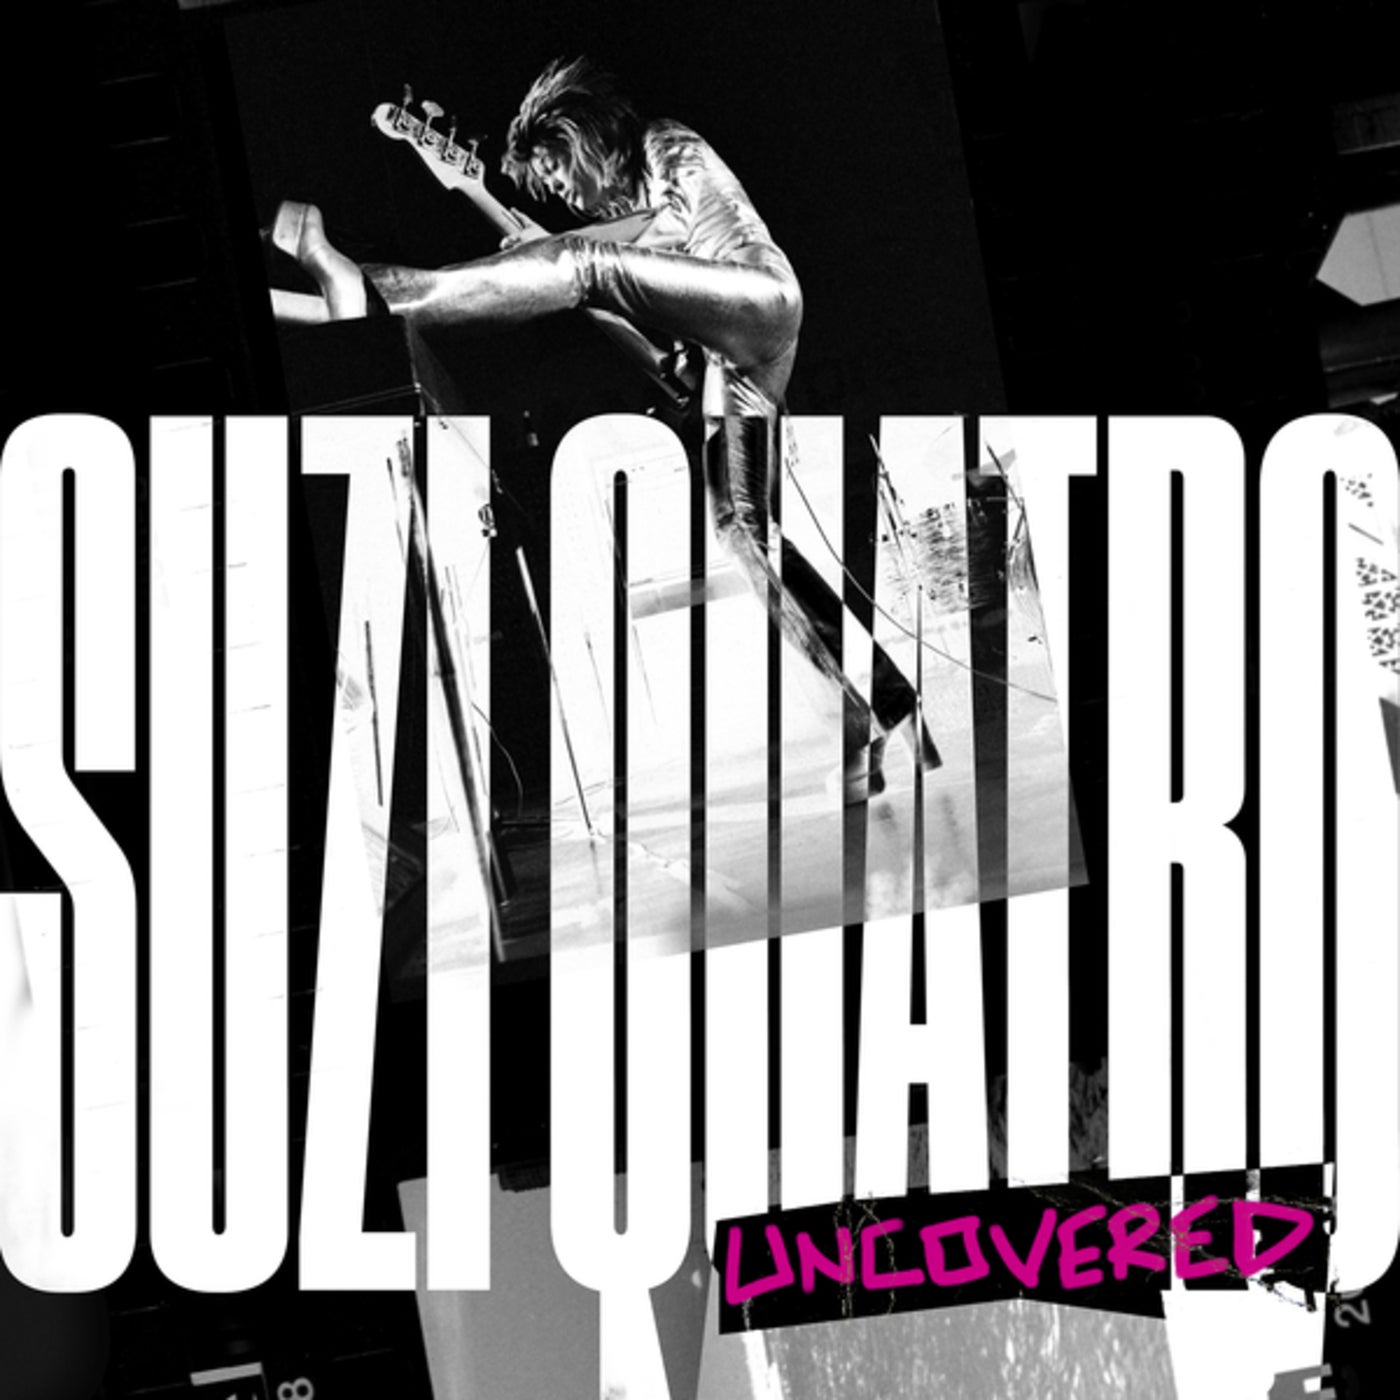 the Spotlight (Deluxe Edition) by Suzi Quatro on Beatsource